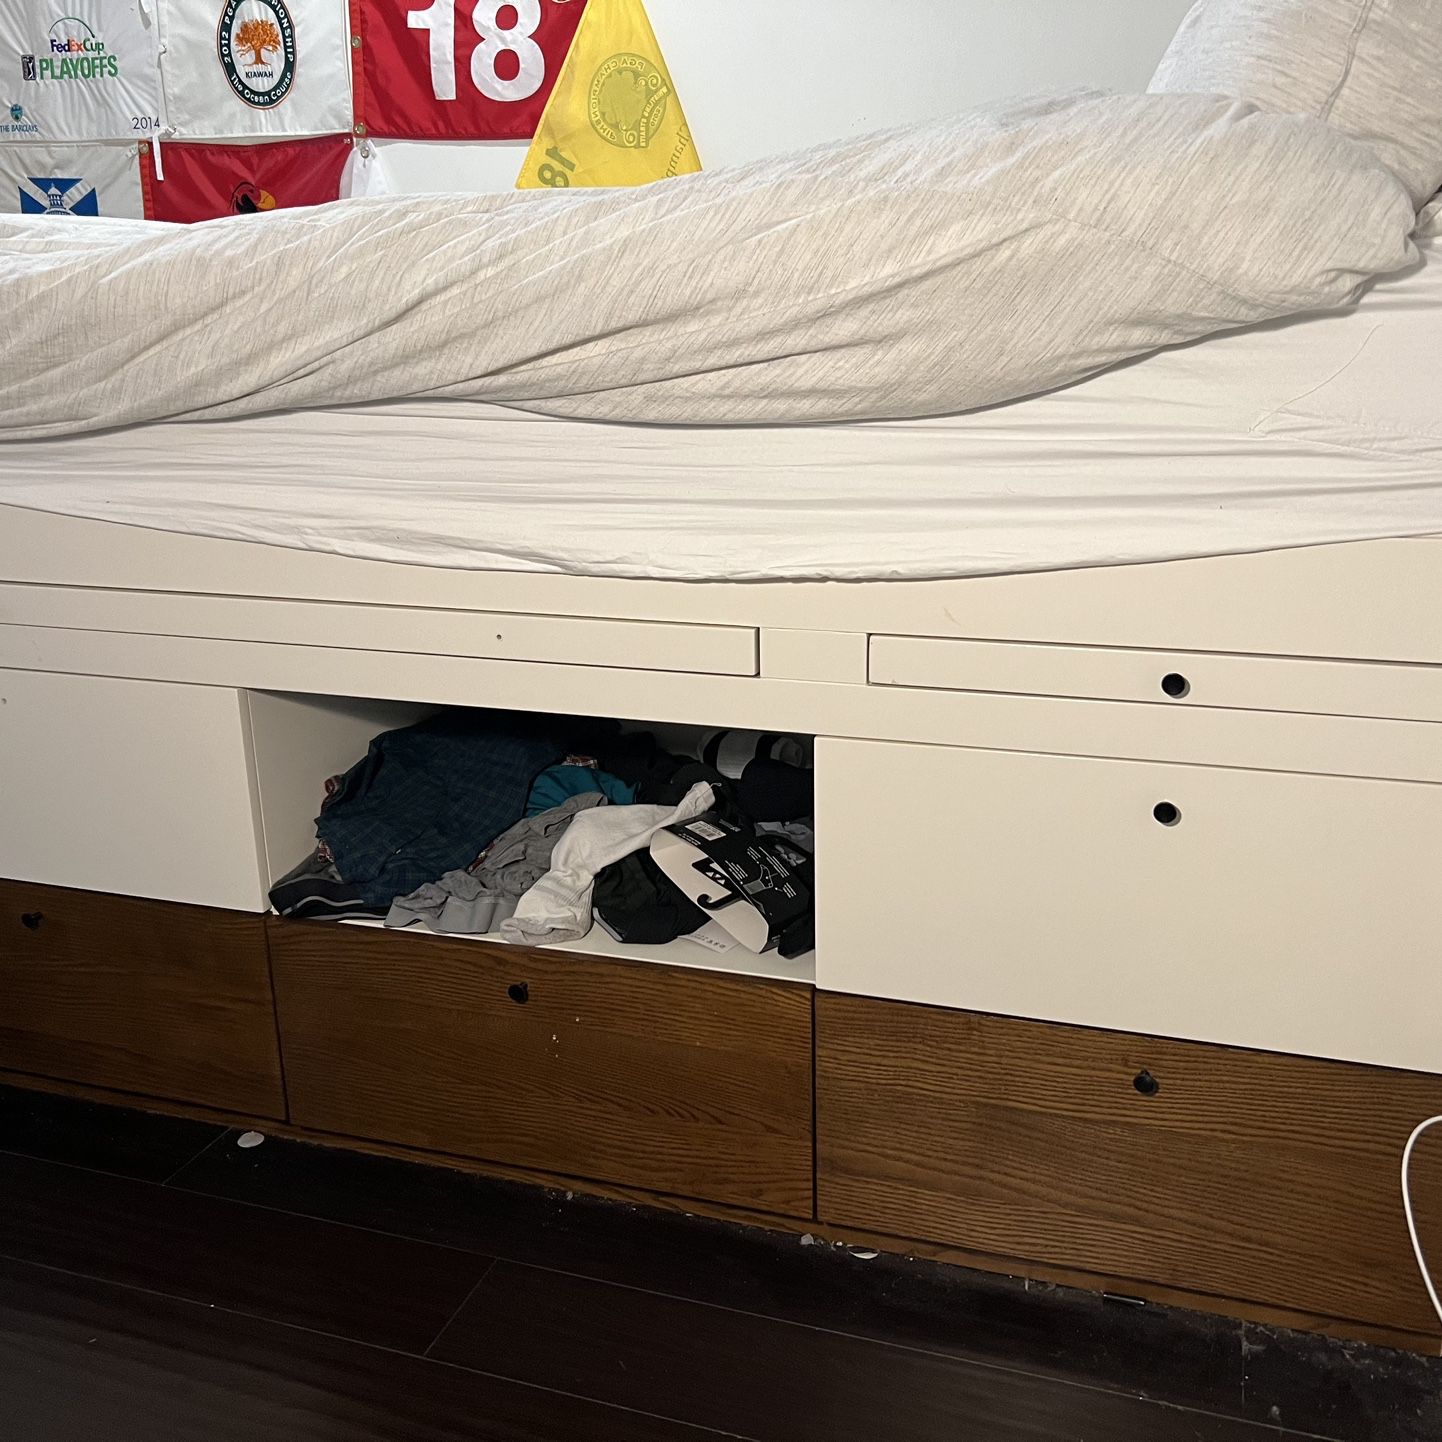 west elm x pbt Modern Captain’s Full Bed Frame & Mattress w/ Built-In Storage and Desk